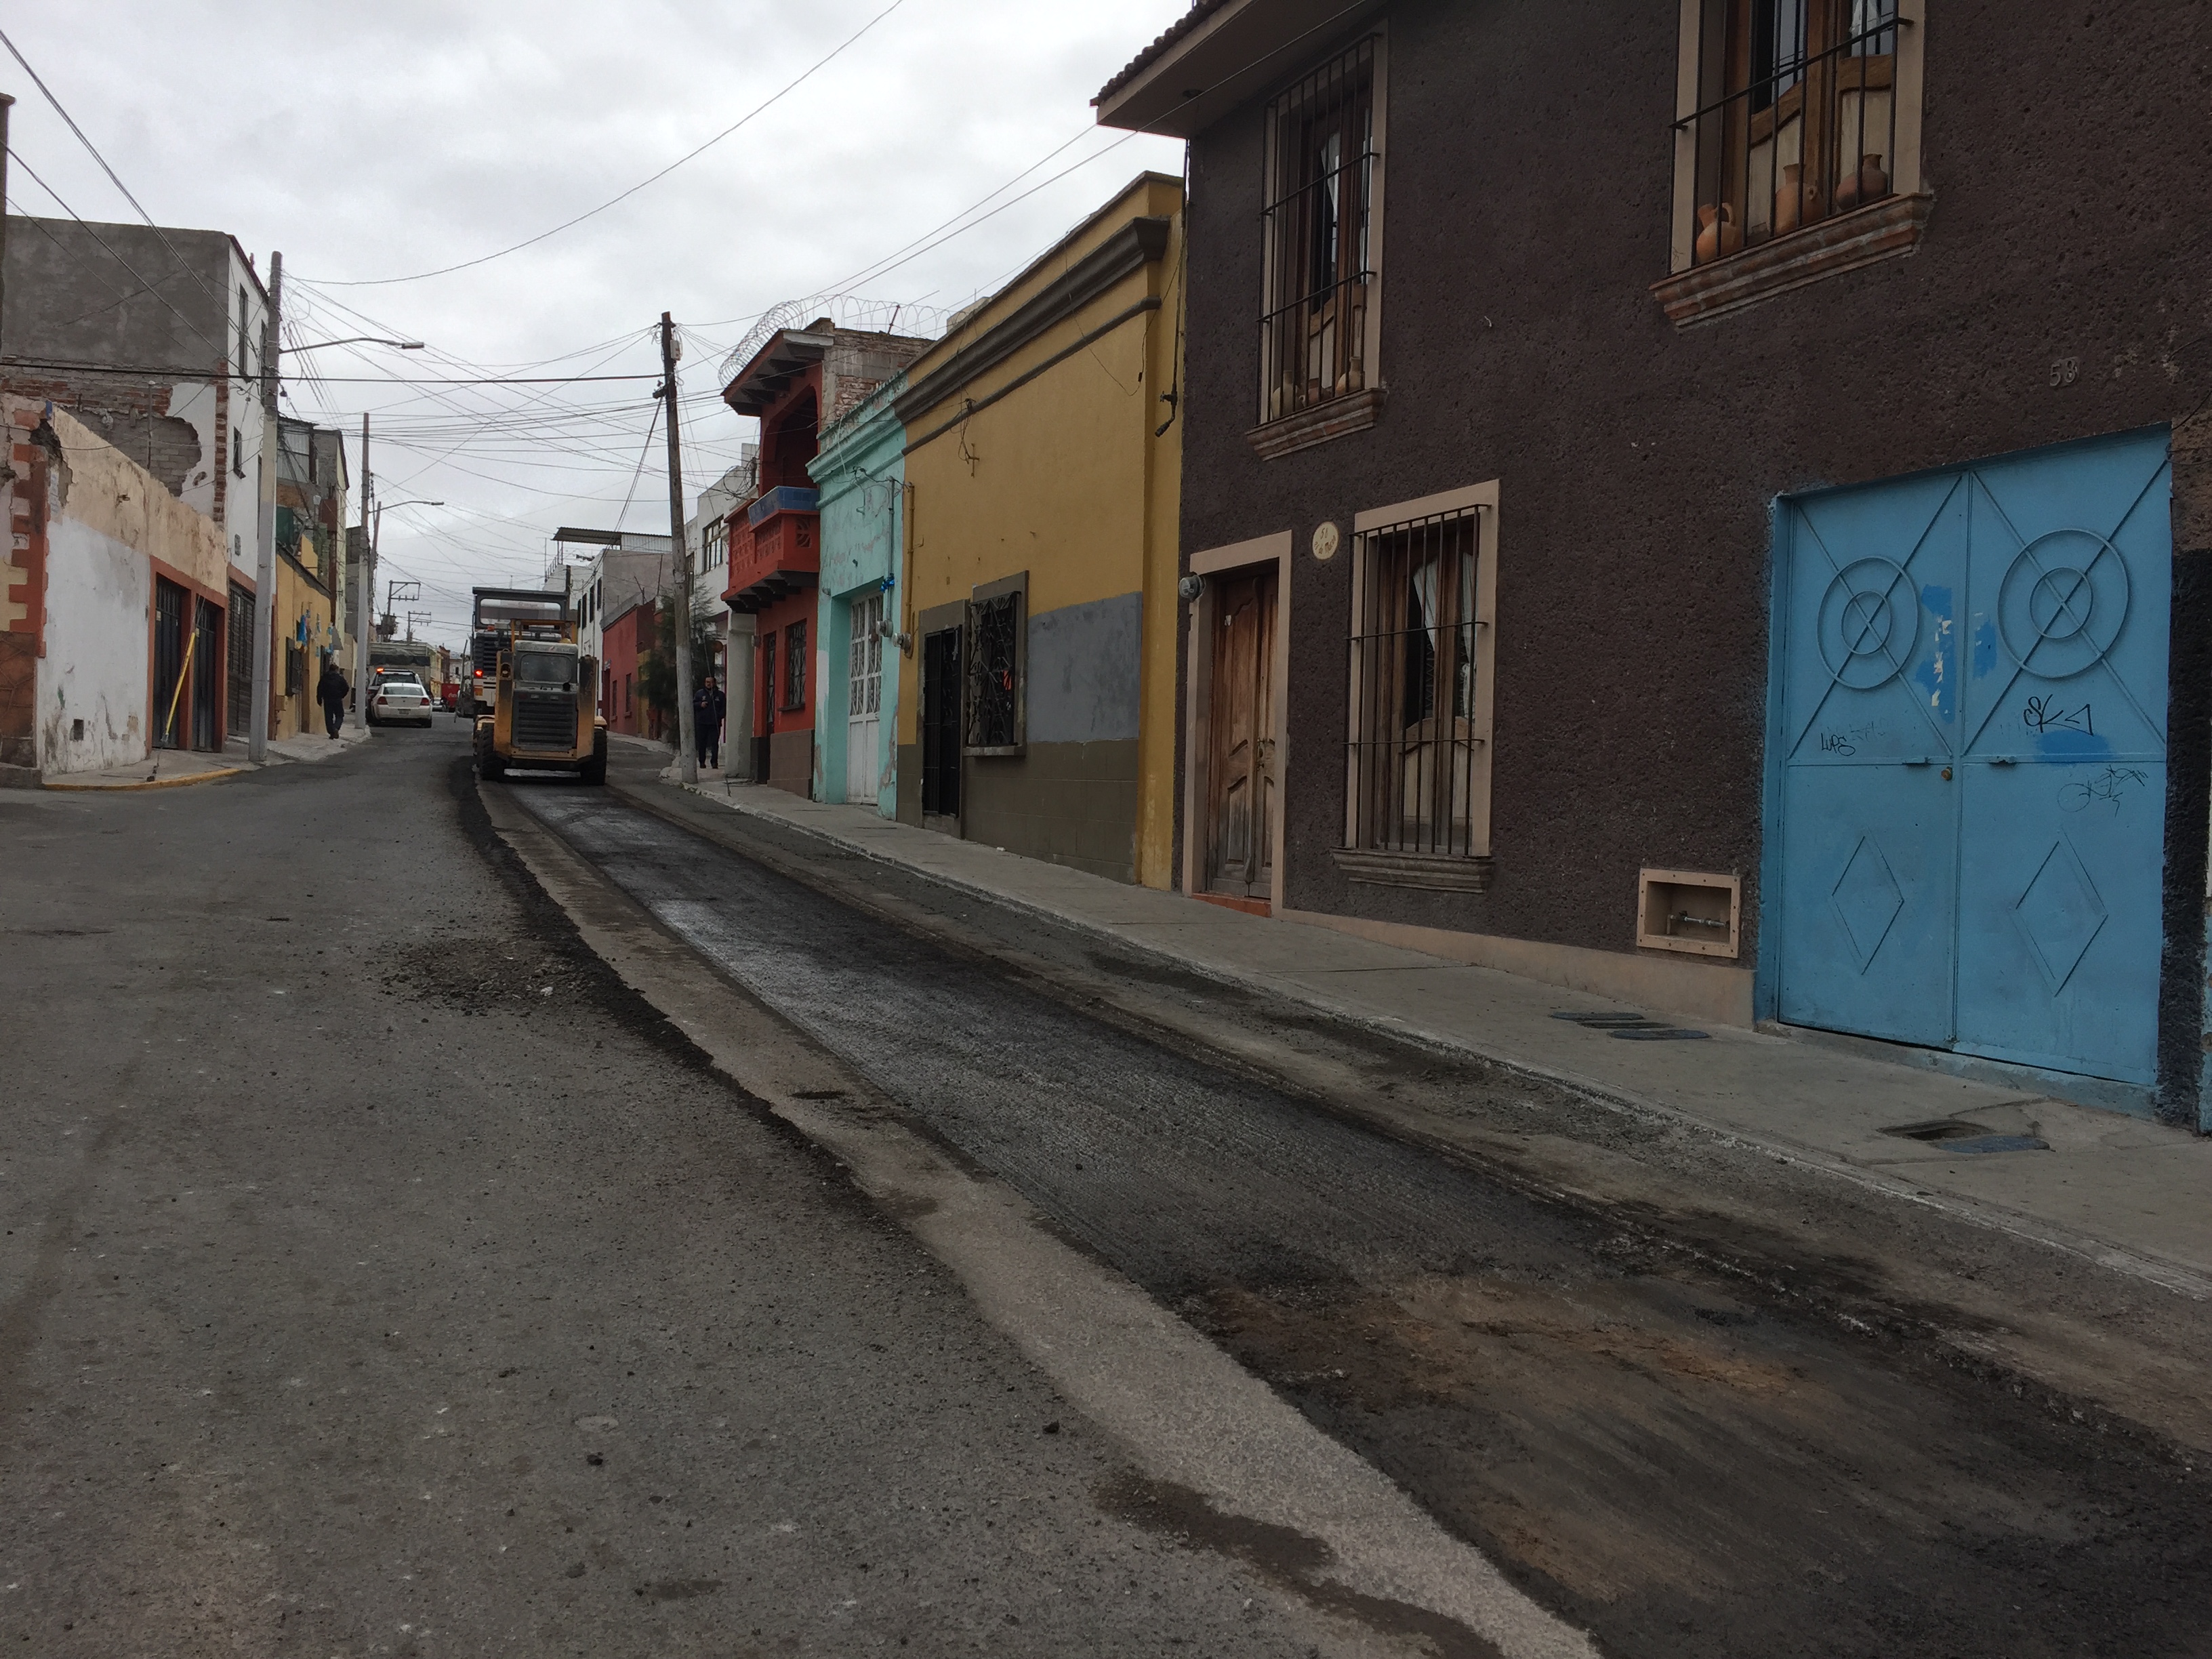  “Reencarpetado de calles ayuda a reducir incidencia delictiva”: Marcos Aguilar